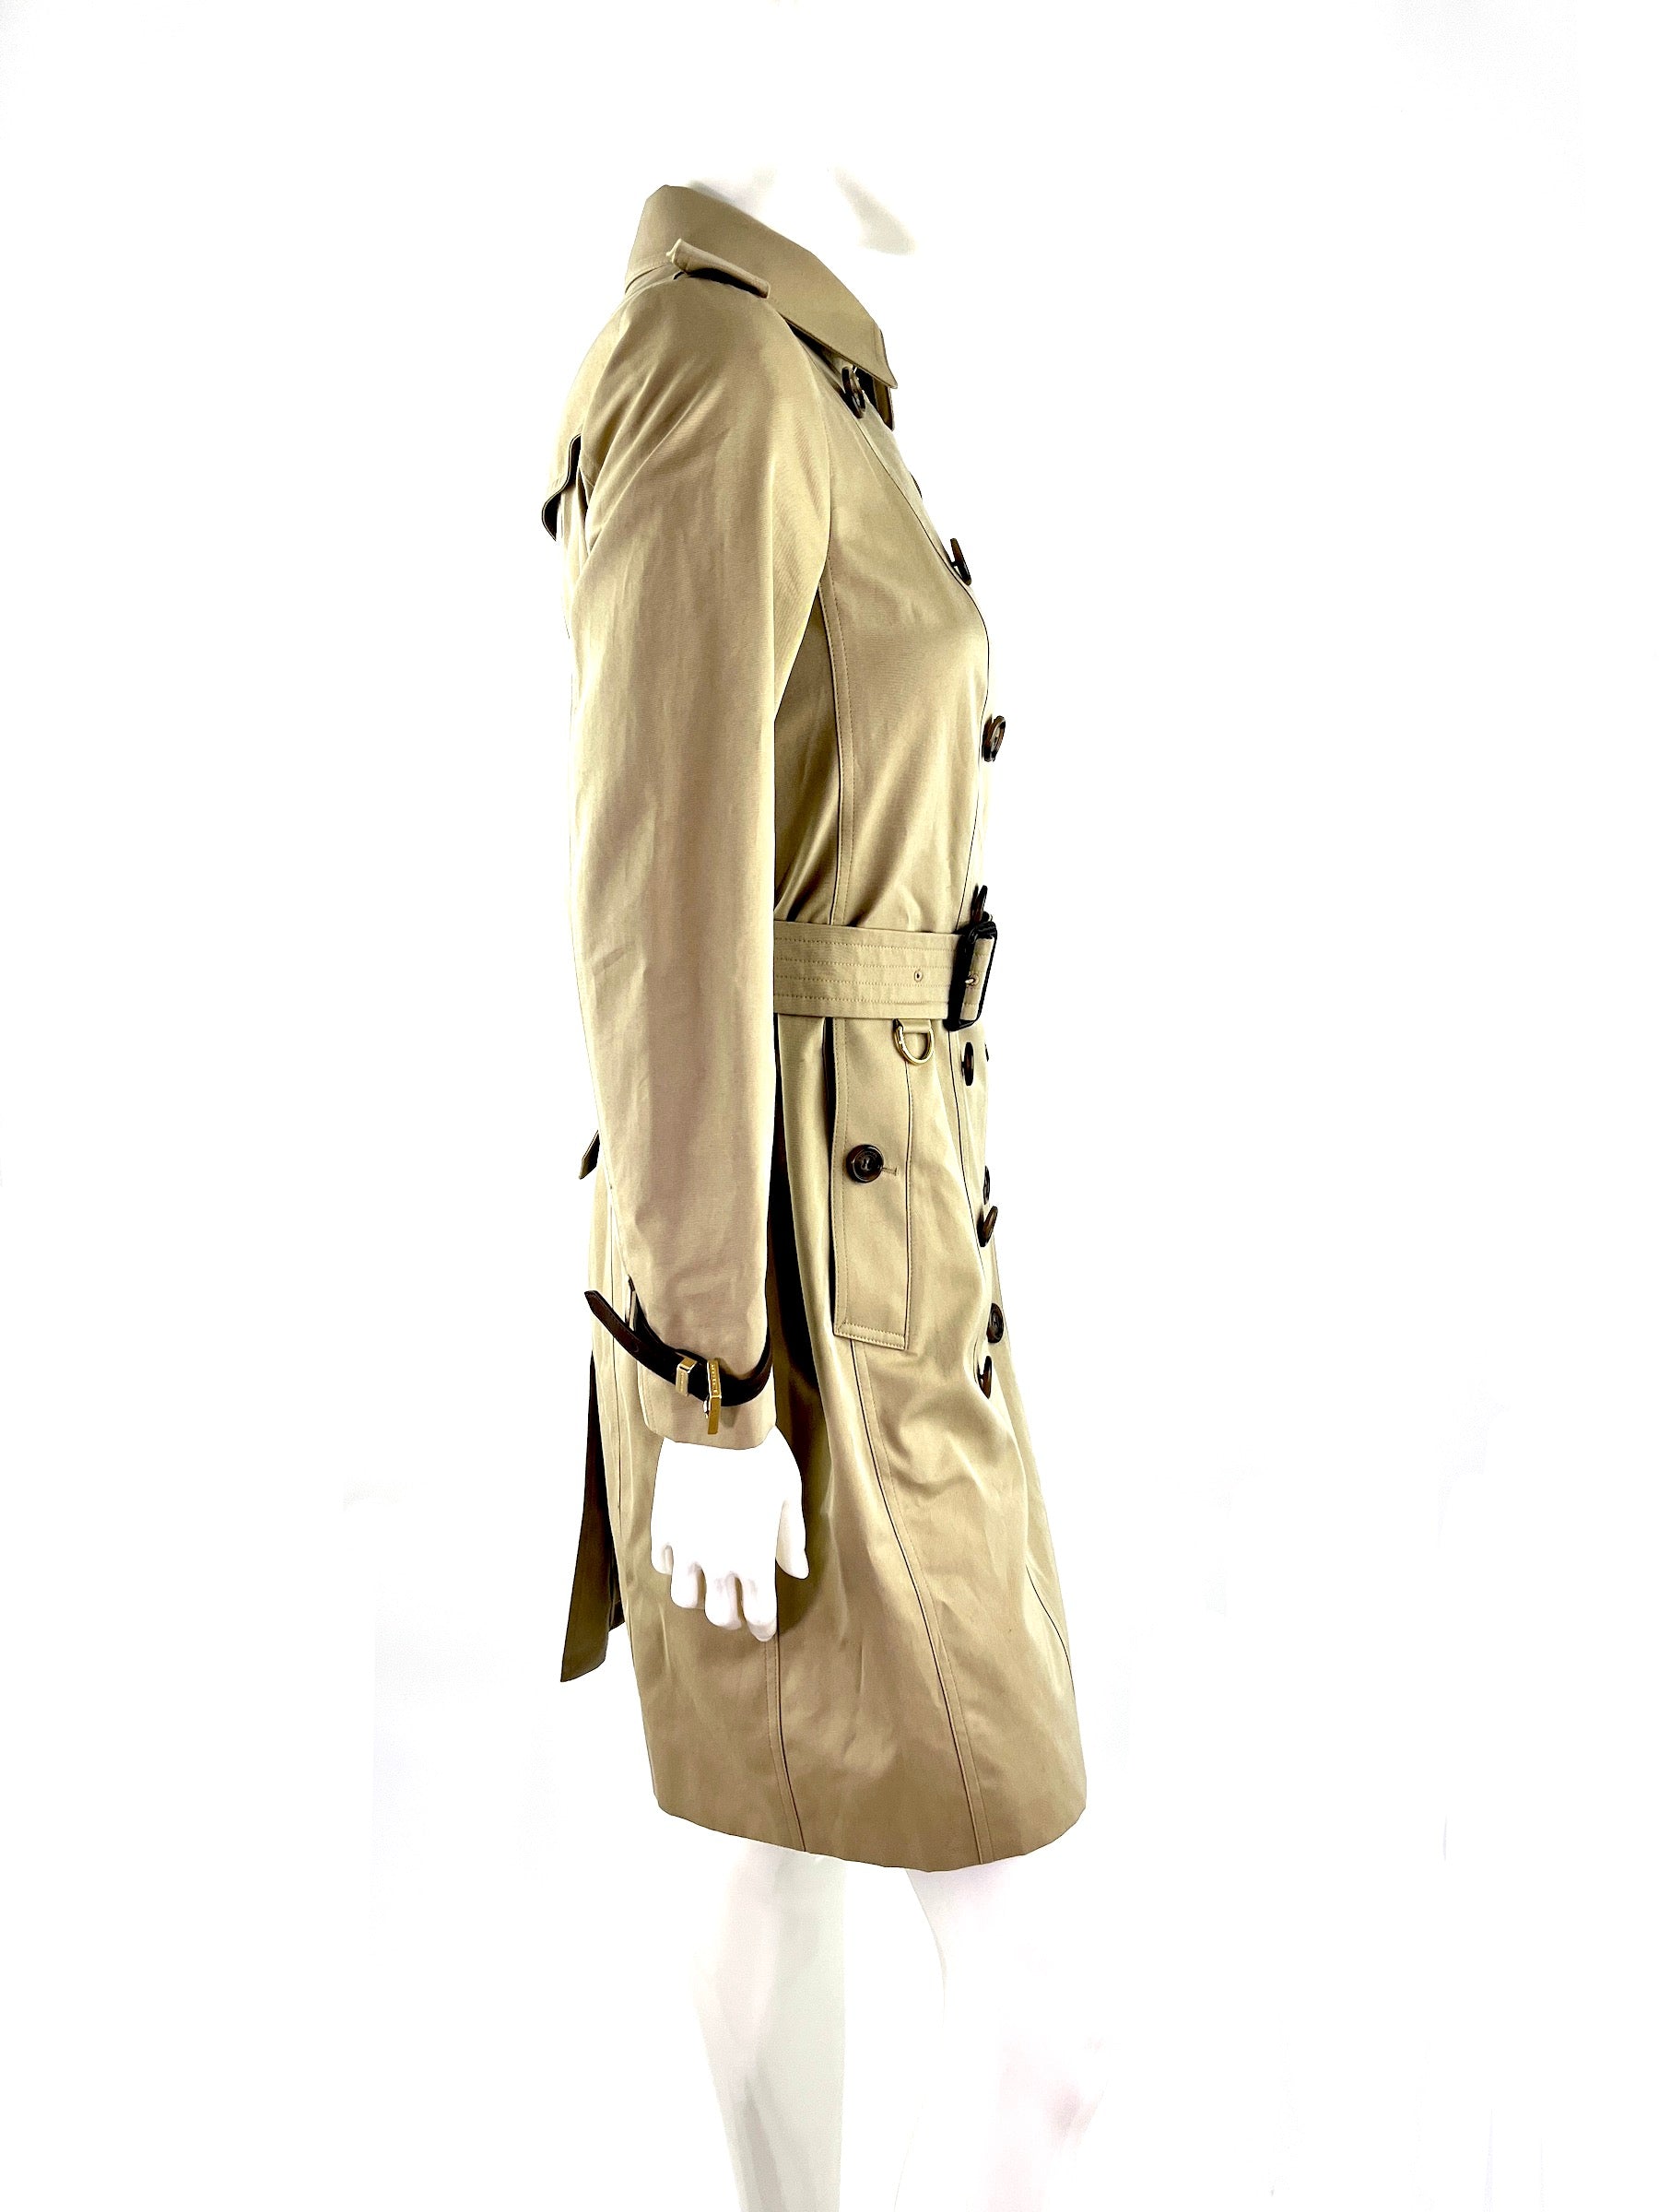 Burberry London Beige Trench Coat Jacket 40 6